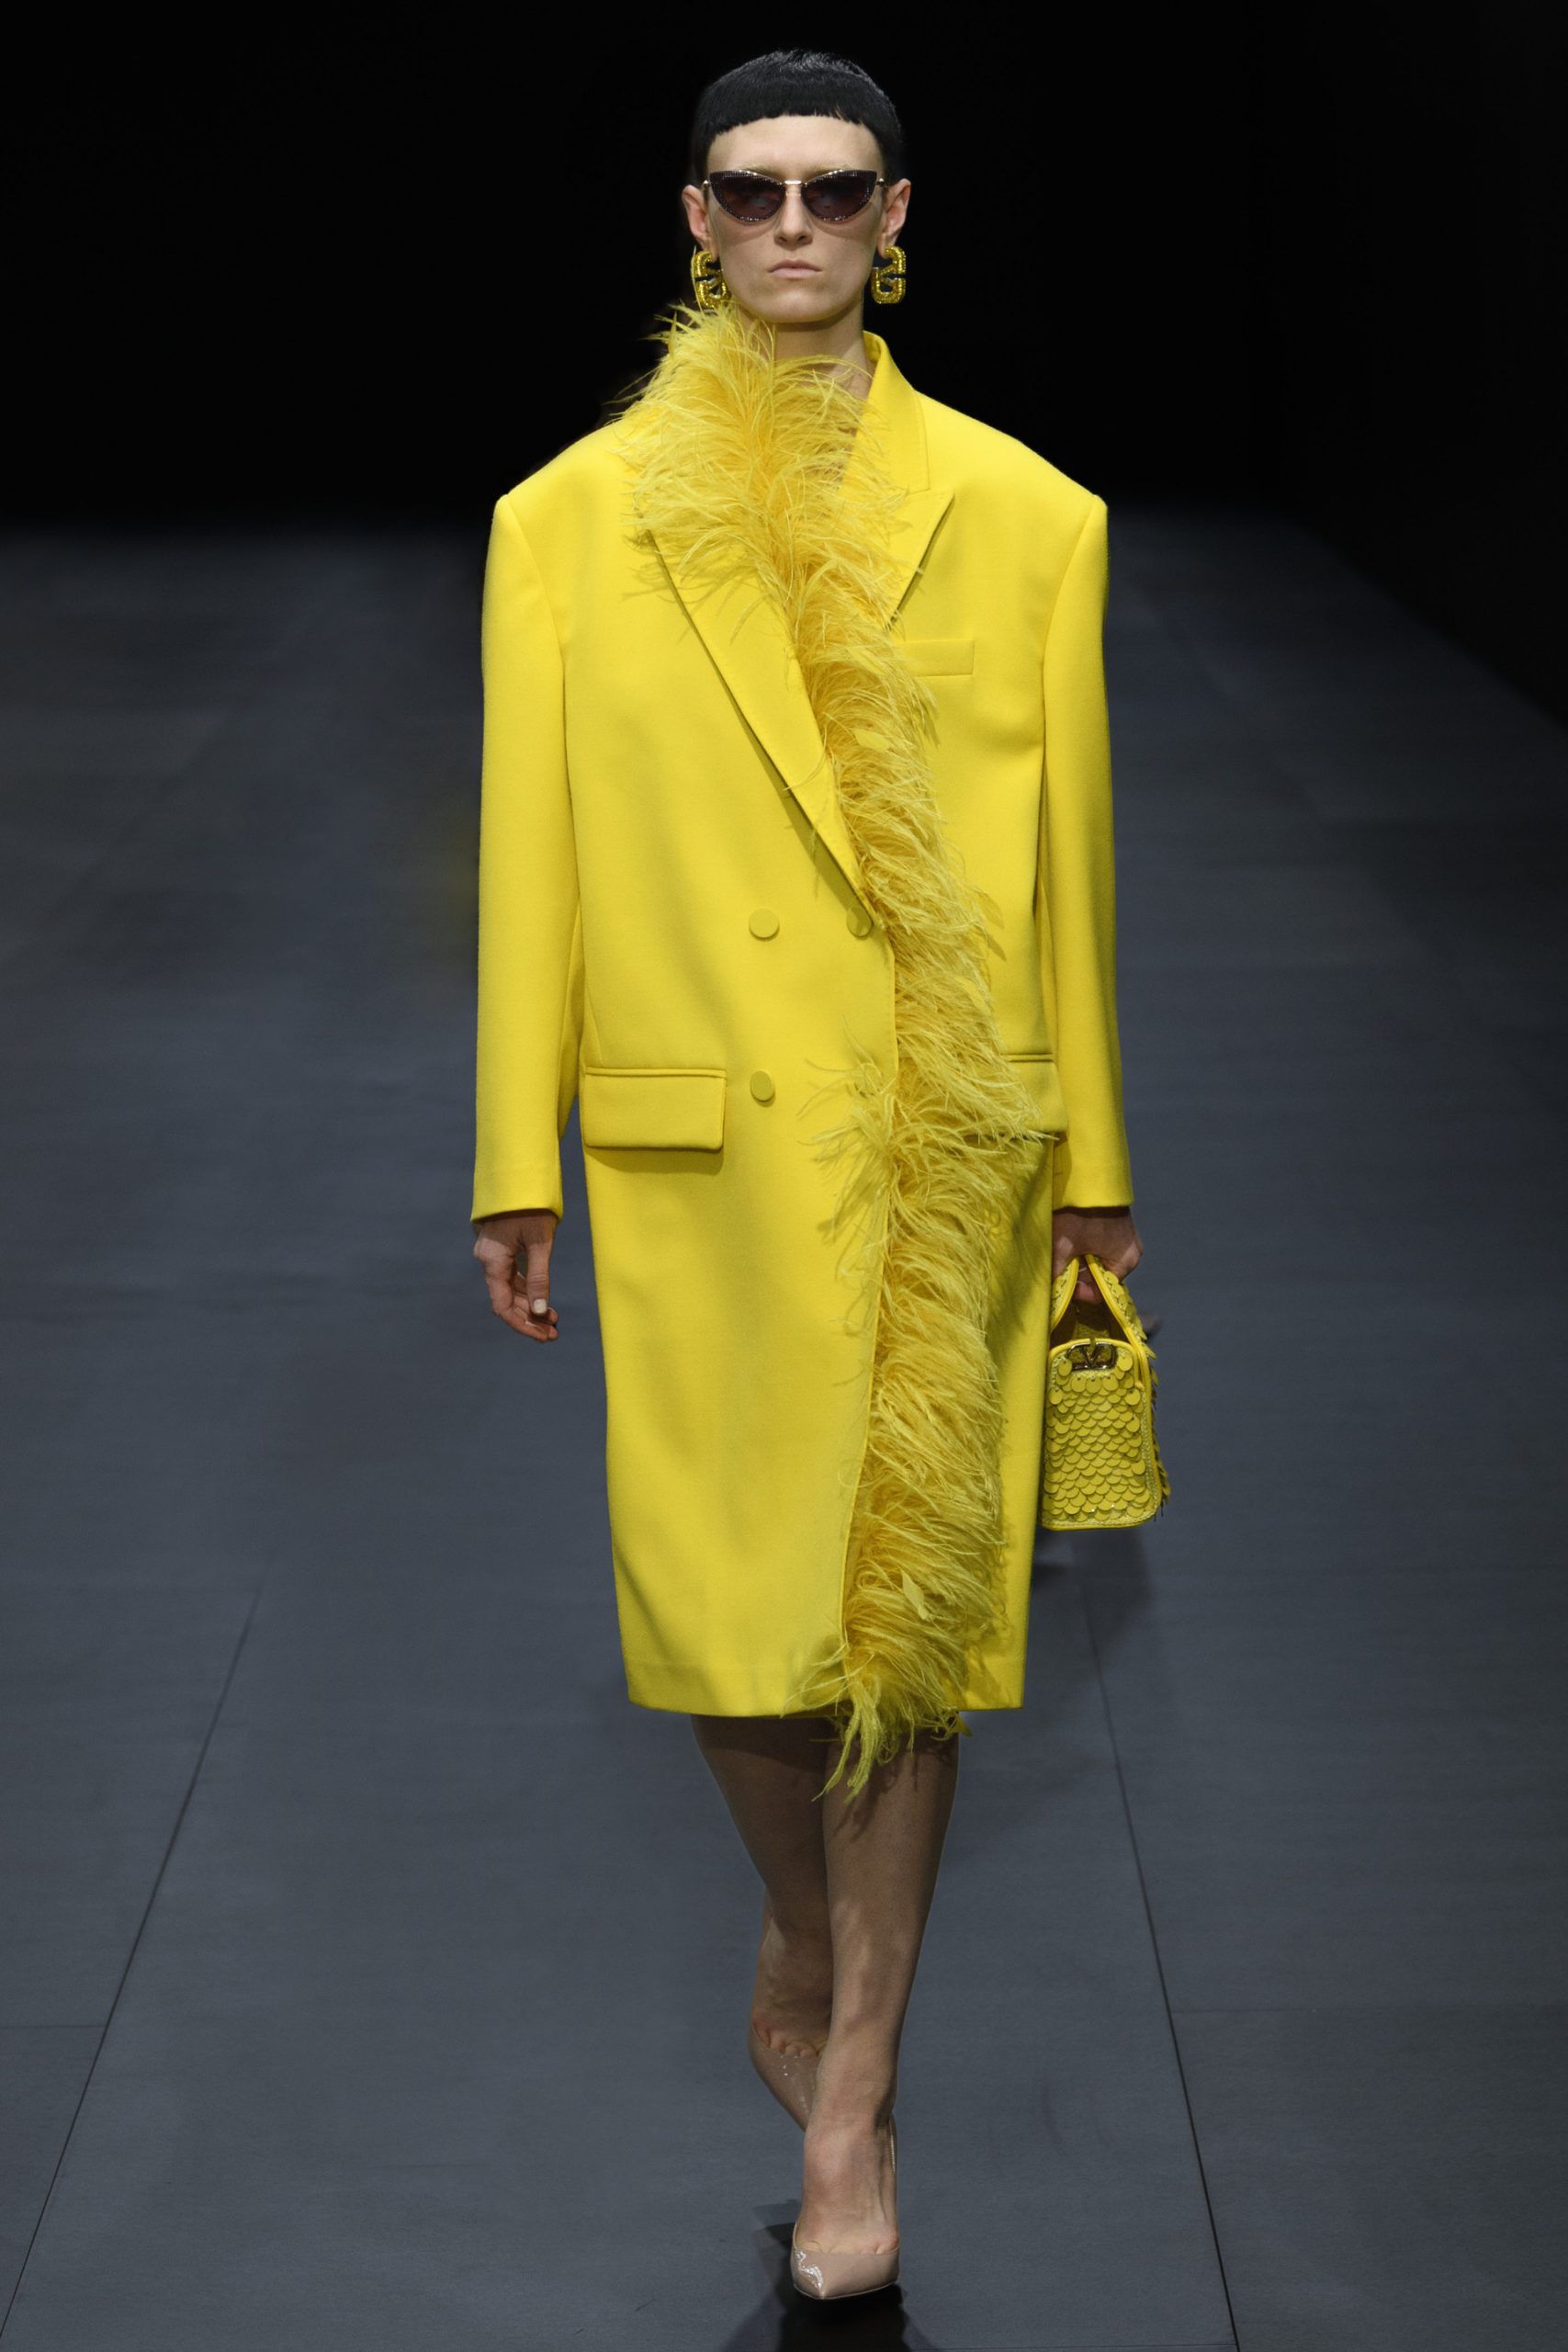 Valentino Spring Summer 2023 is Pierpaolo Piccioli's take on minimalism